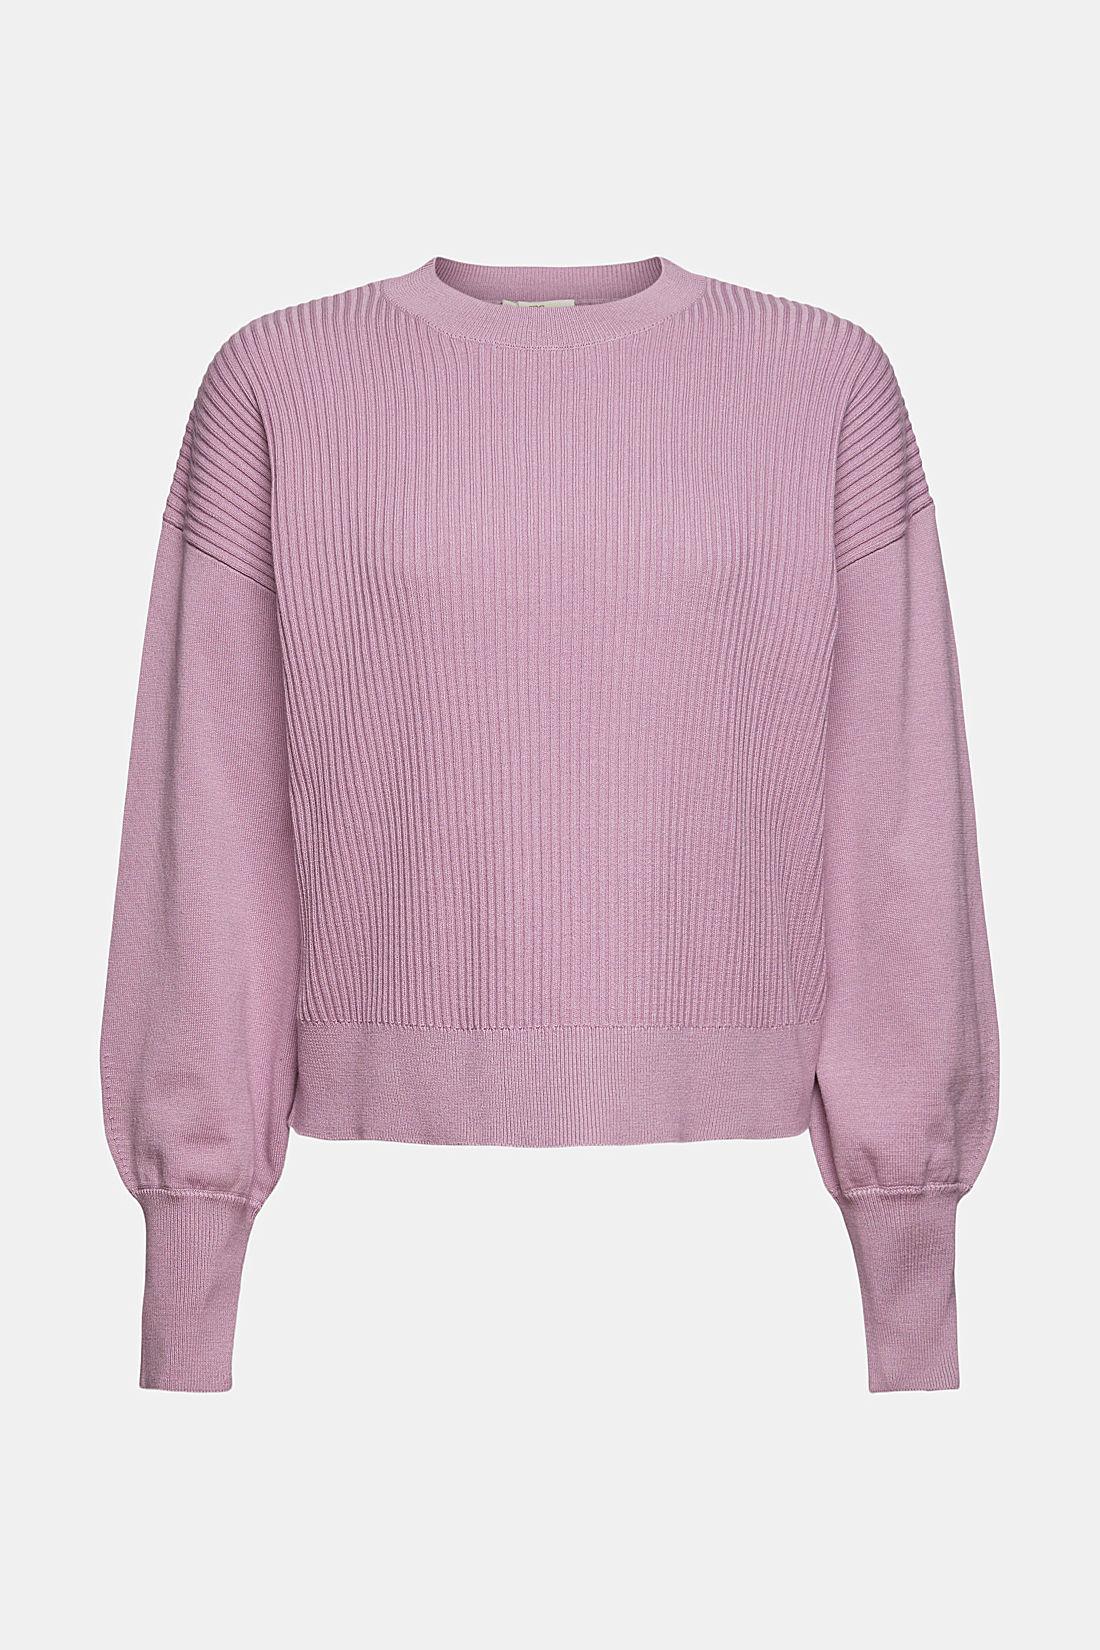 091ee1i337 Cardigan Esprit en coloris Violet Femme Vêtements Sweats et pull overs Pulls sans manches 